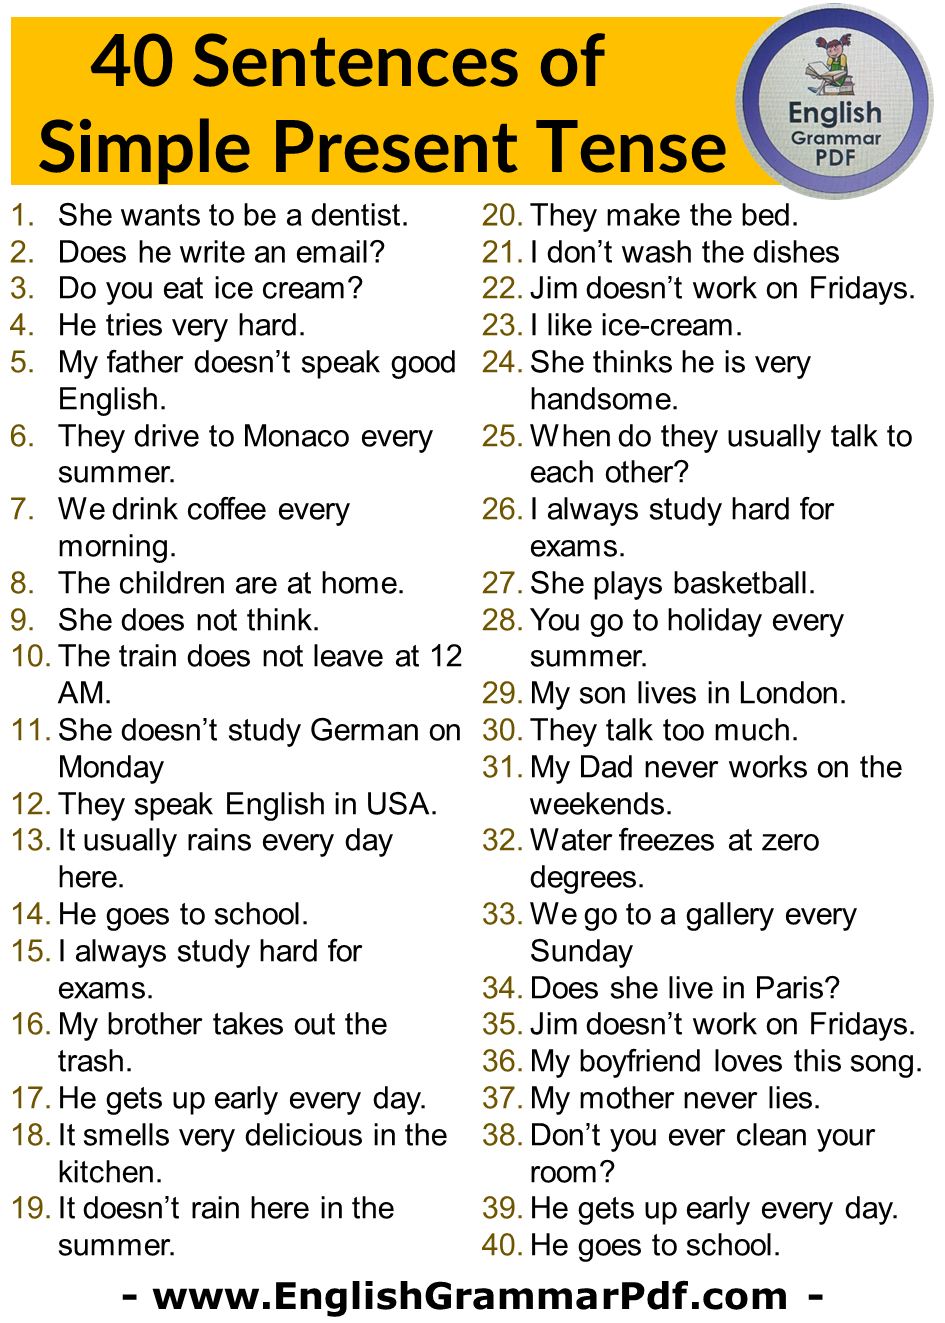 40 Sentences of Simple Present Tense